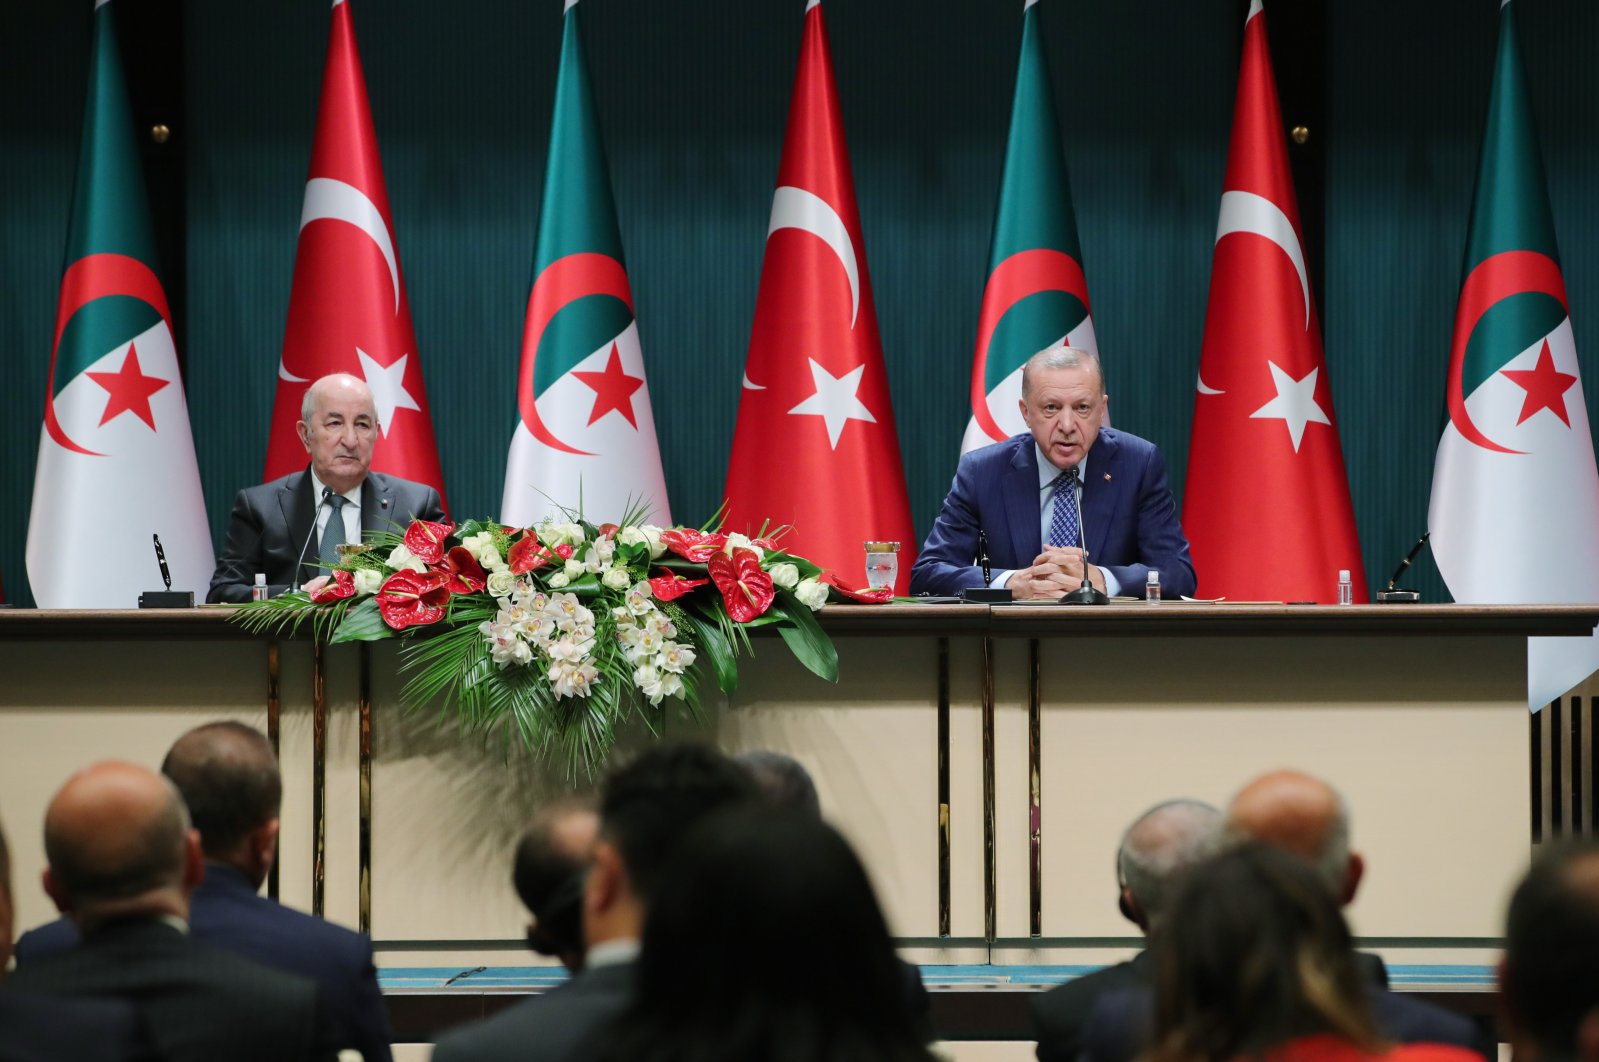 President Recep Tayyip Erdoğan (R) speaks during a news conference with his Algerian counterpart Abdelmadjid Tebboune in the capital Ankara, Turkey, May 16, 2022. (IHA Photo)